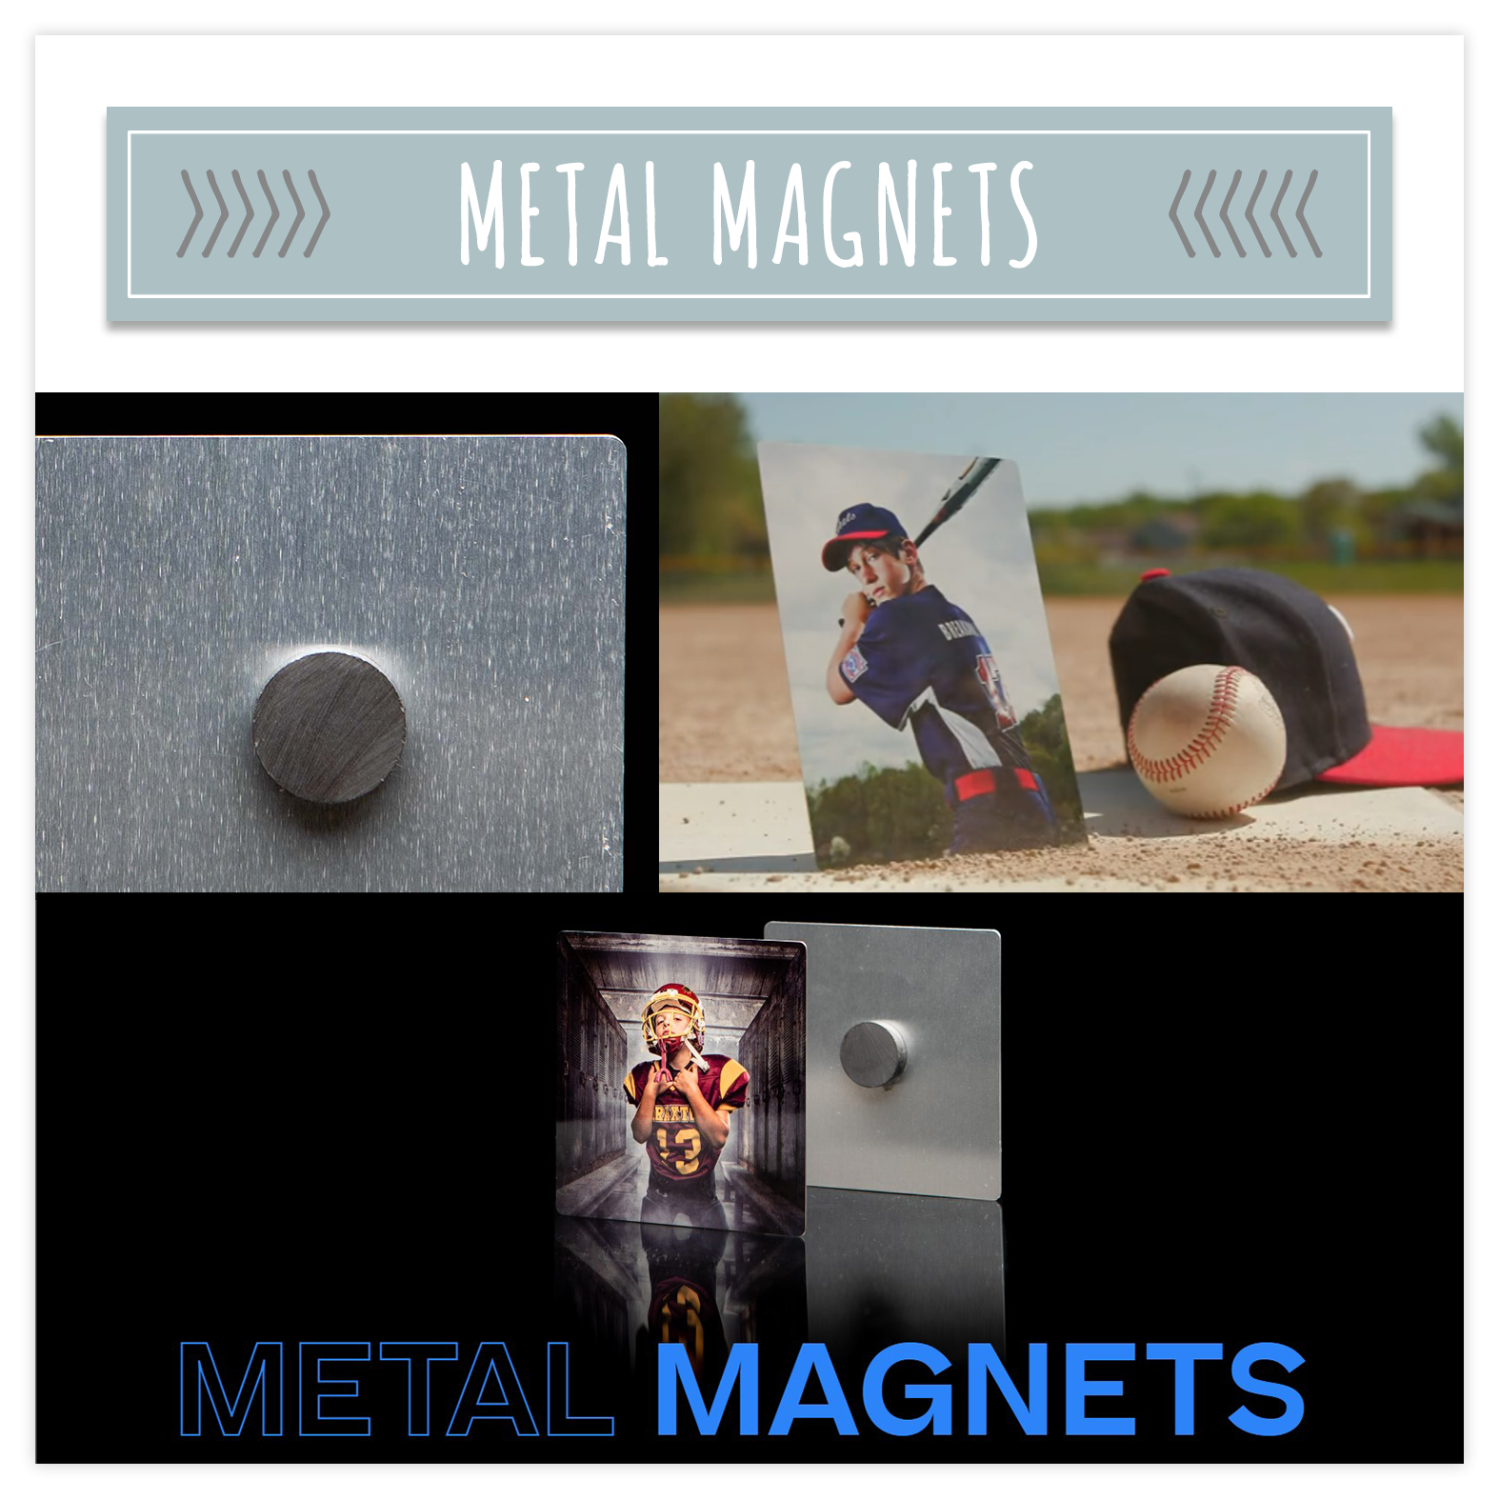 METAL MAGNETS